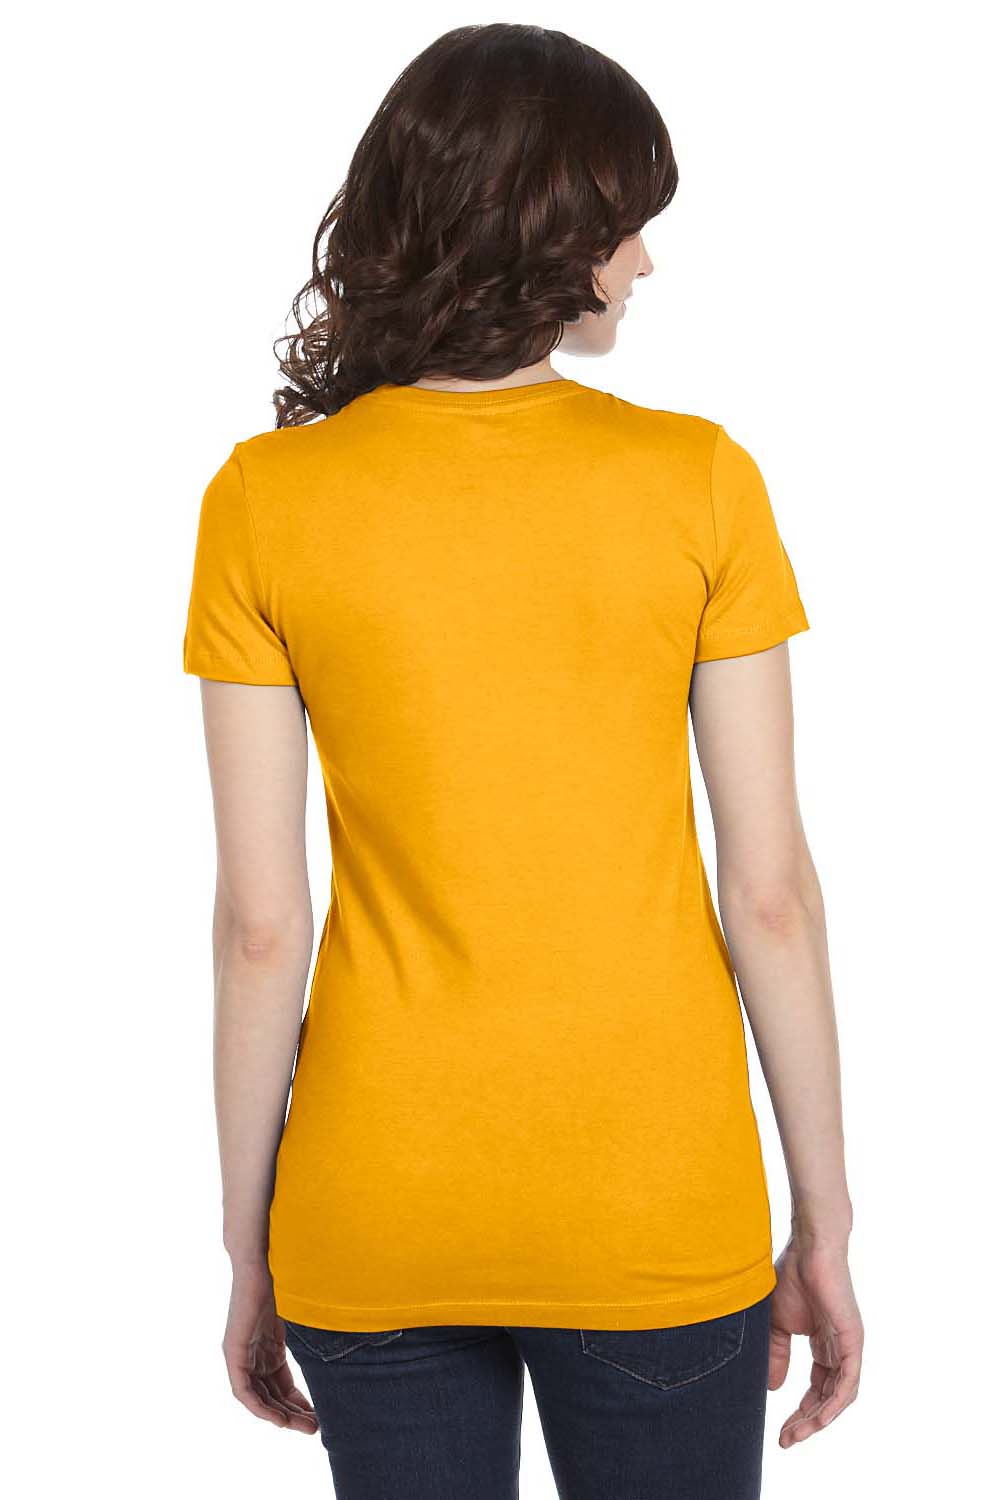 Bella + Canvas 6004 Womens The Favorite Short Sleeve Crewneck T-Shirt Gold Back